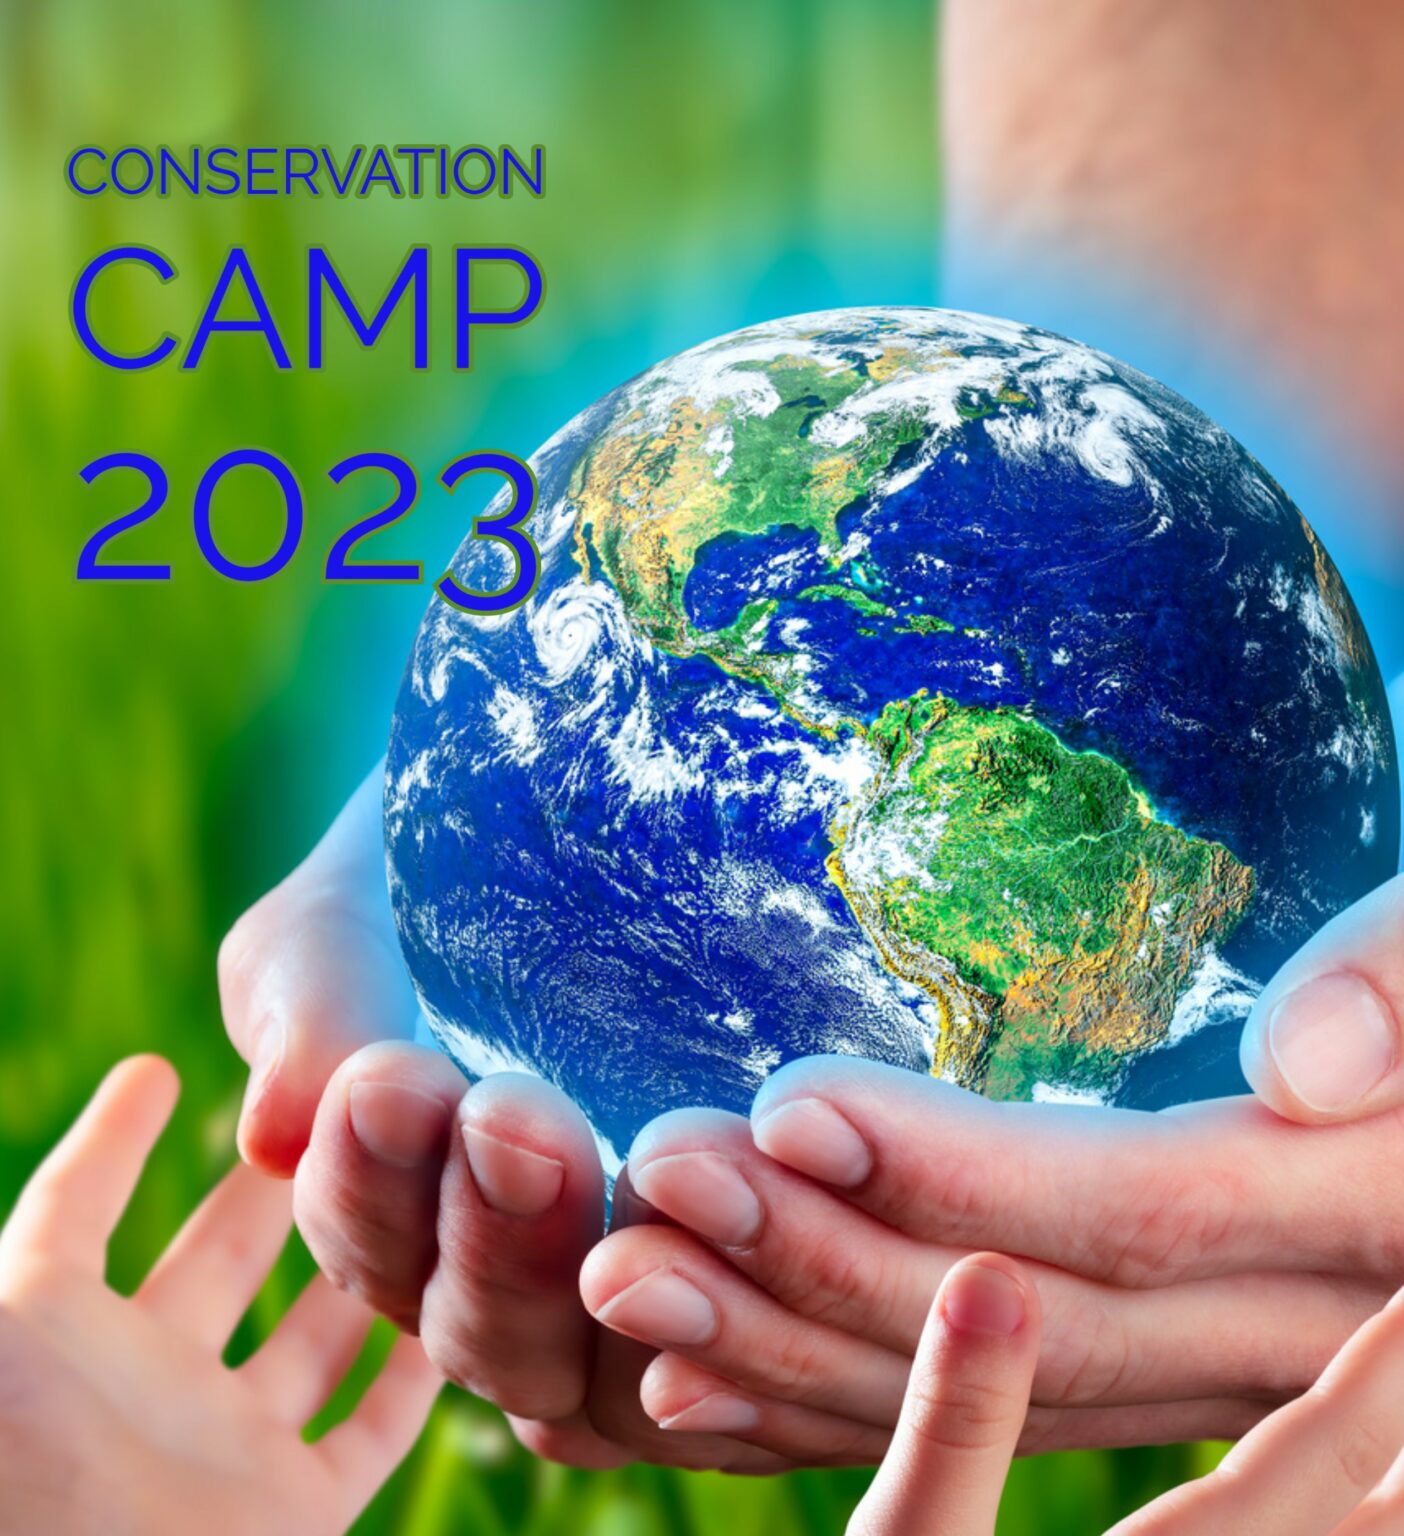 Webpost Conservation Camp 2023 copy-1